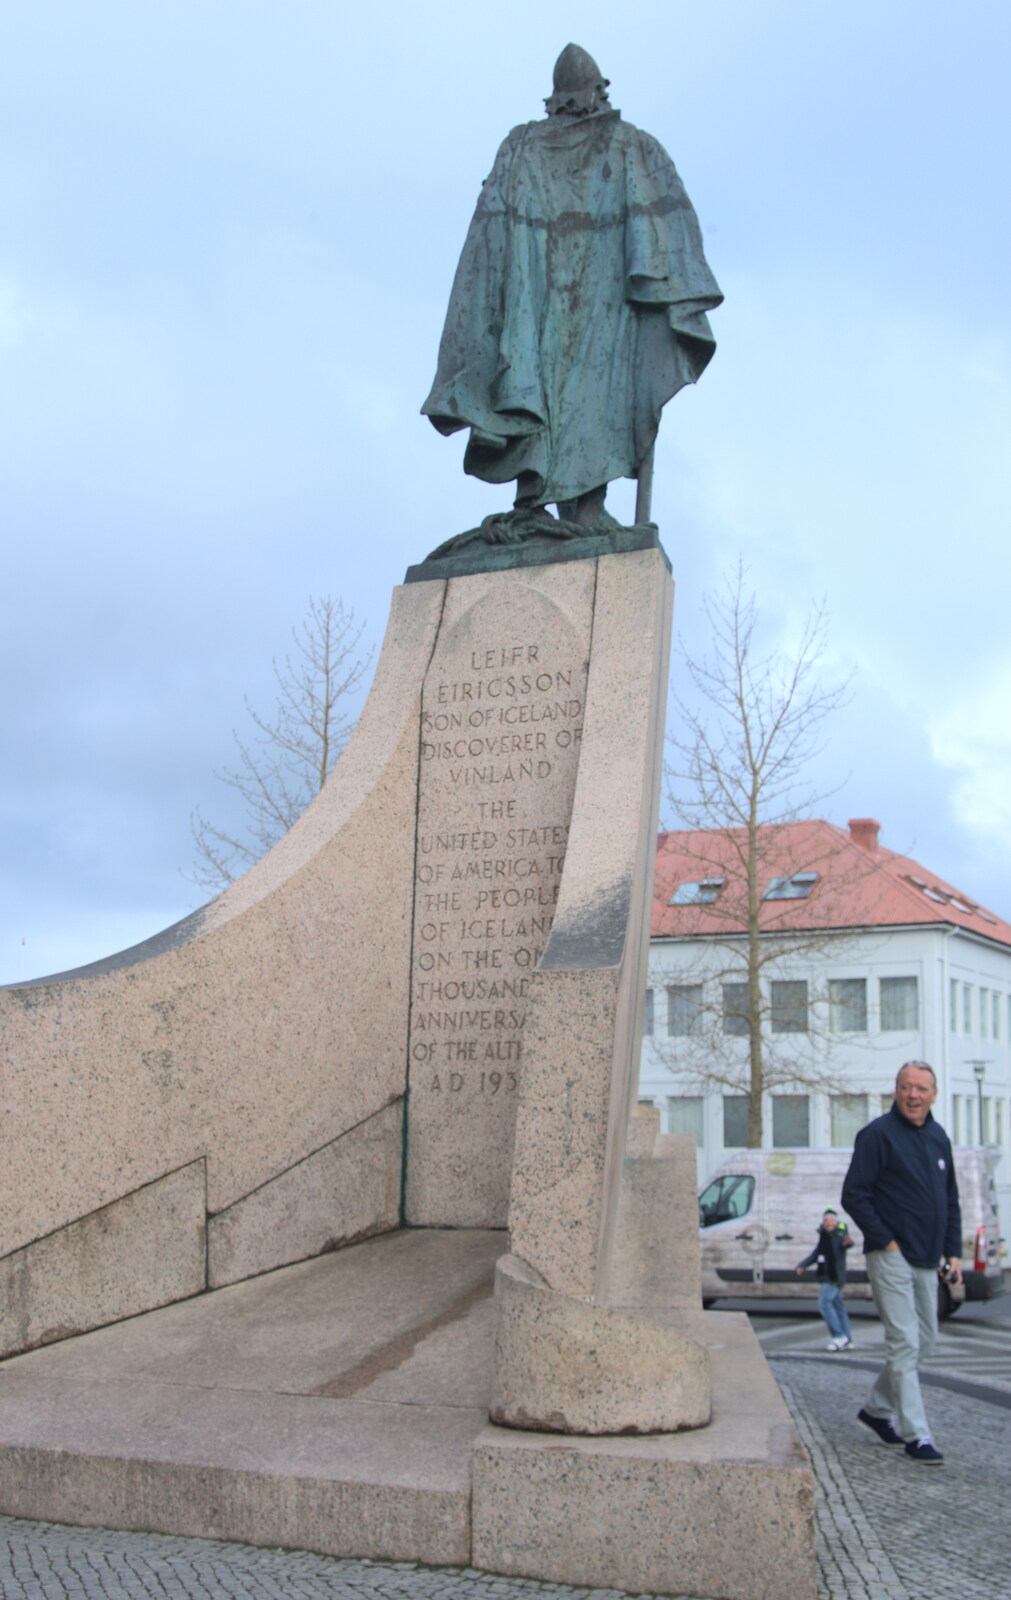 Statue of Leifr Eríksson, founder of Reykjavík from Hallgrímskirkja Cathedral and Whale Watching, Reykjavik - 21st April 2017